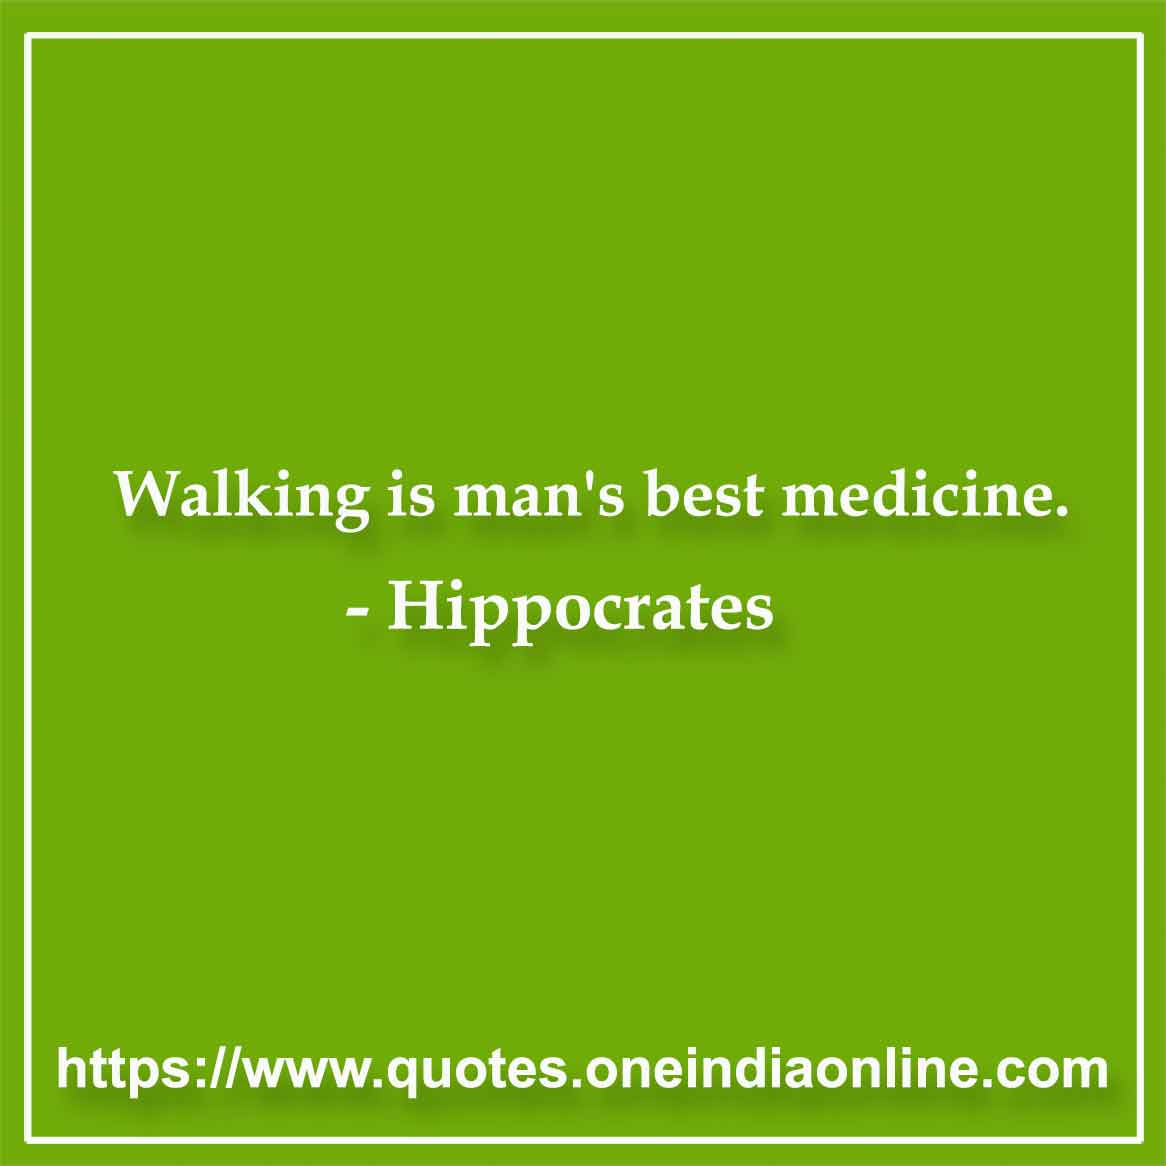 Walking is man's best medicine. 

- Hippocrates